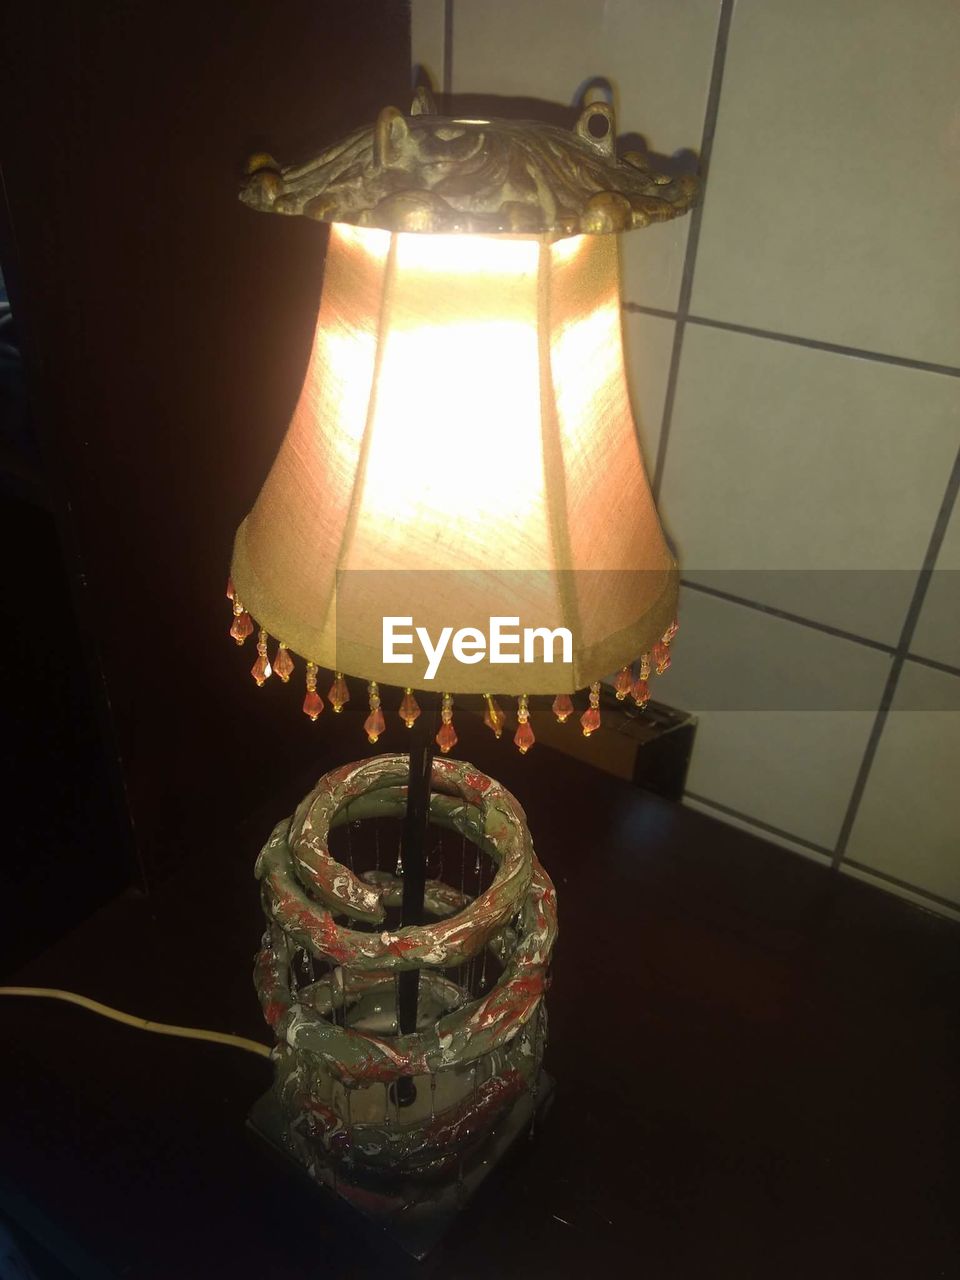 ILLUMINATED LAMP HANGING ON TABLE